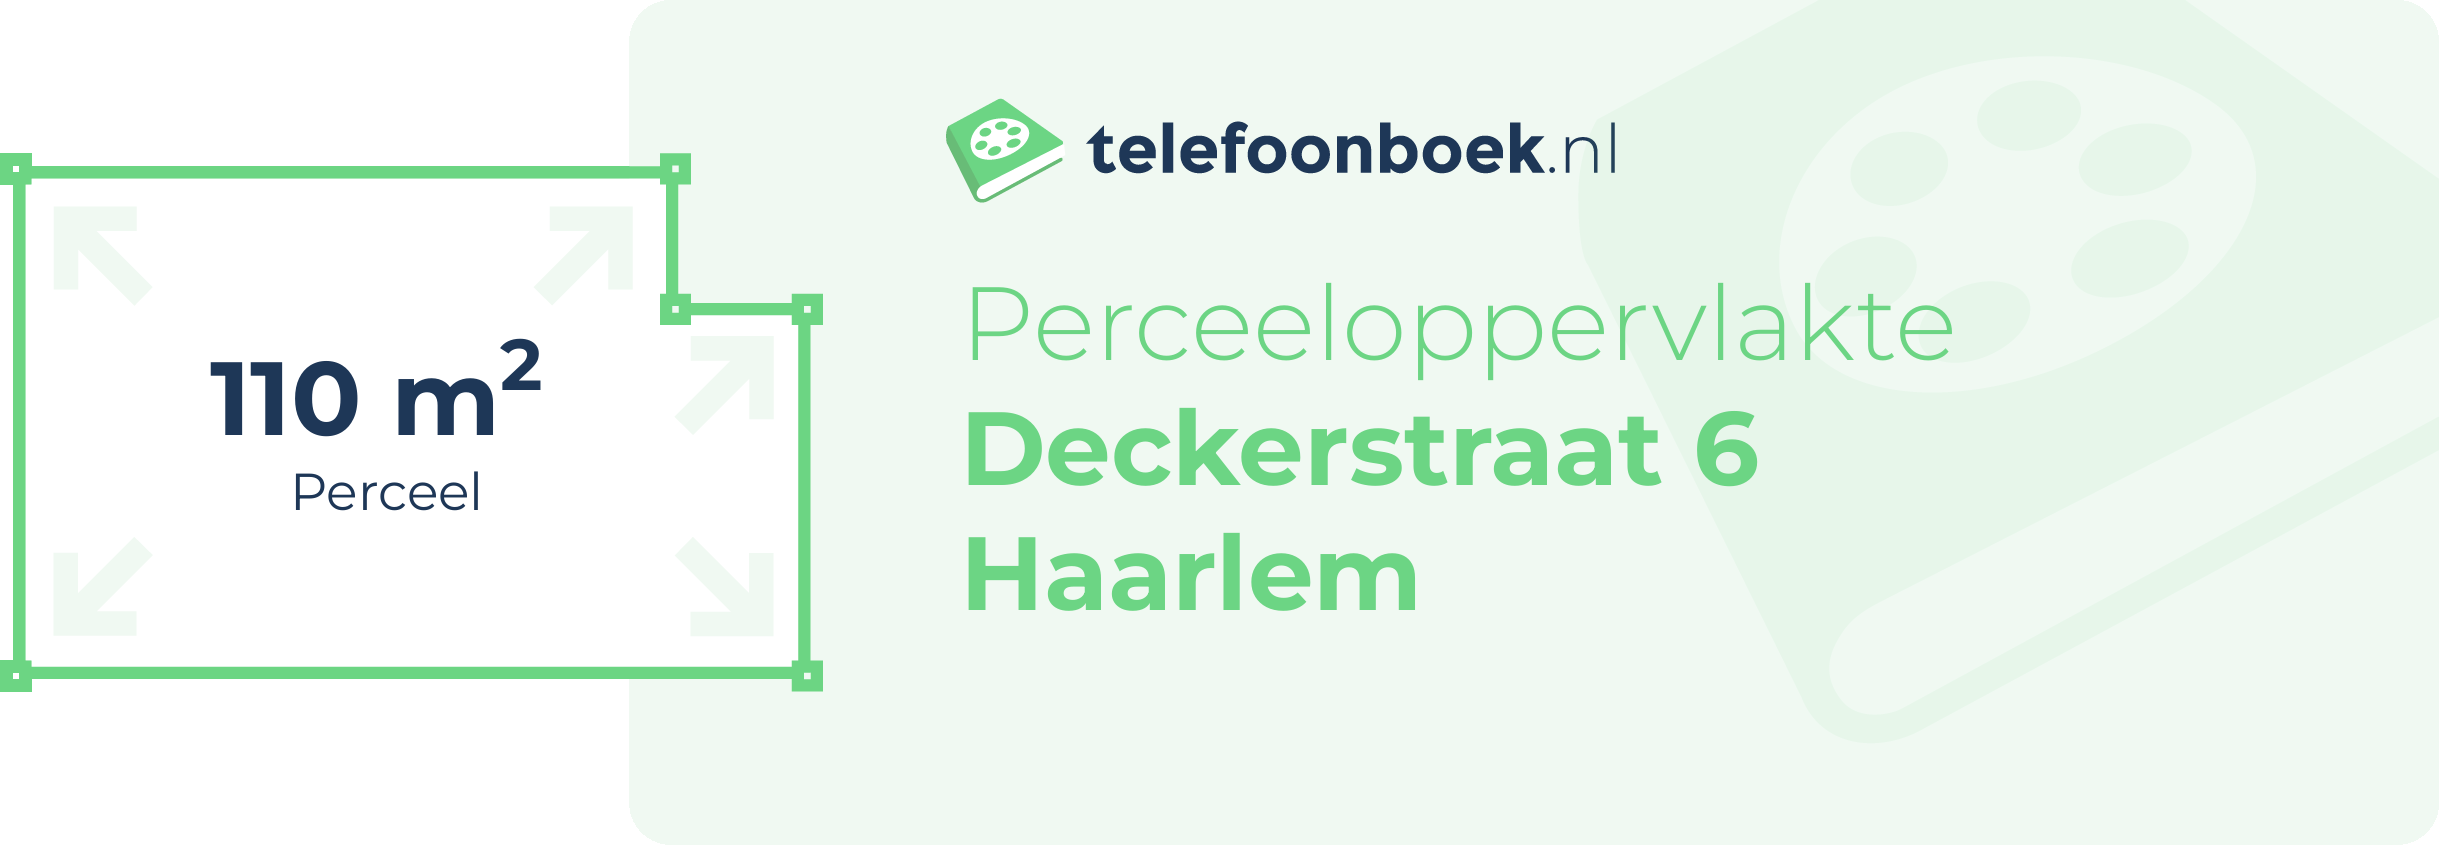 Perceeloppervlakte Deckerstraat 6 Haarlem